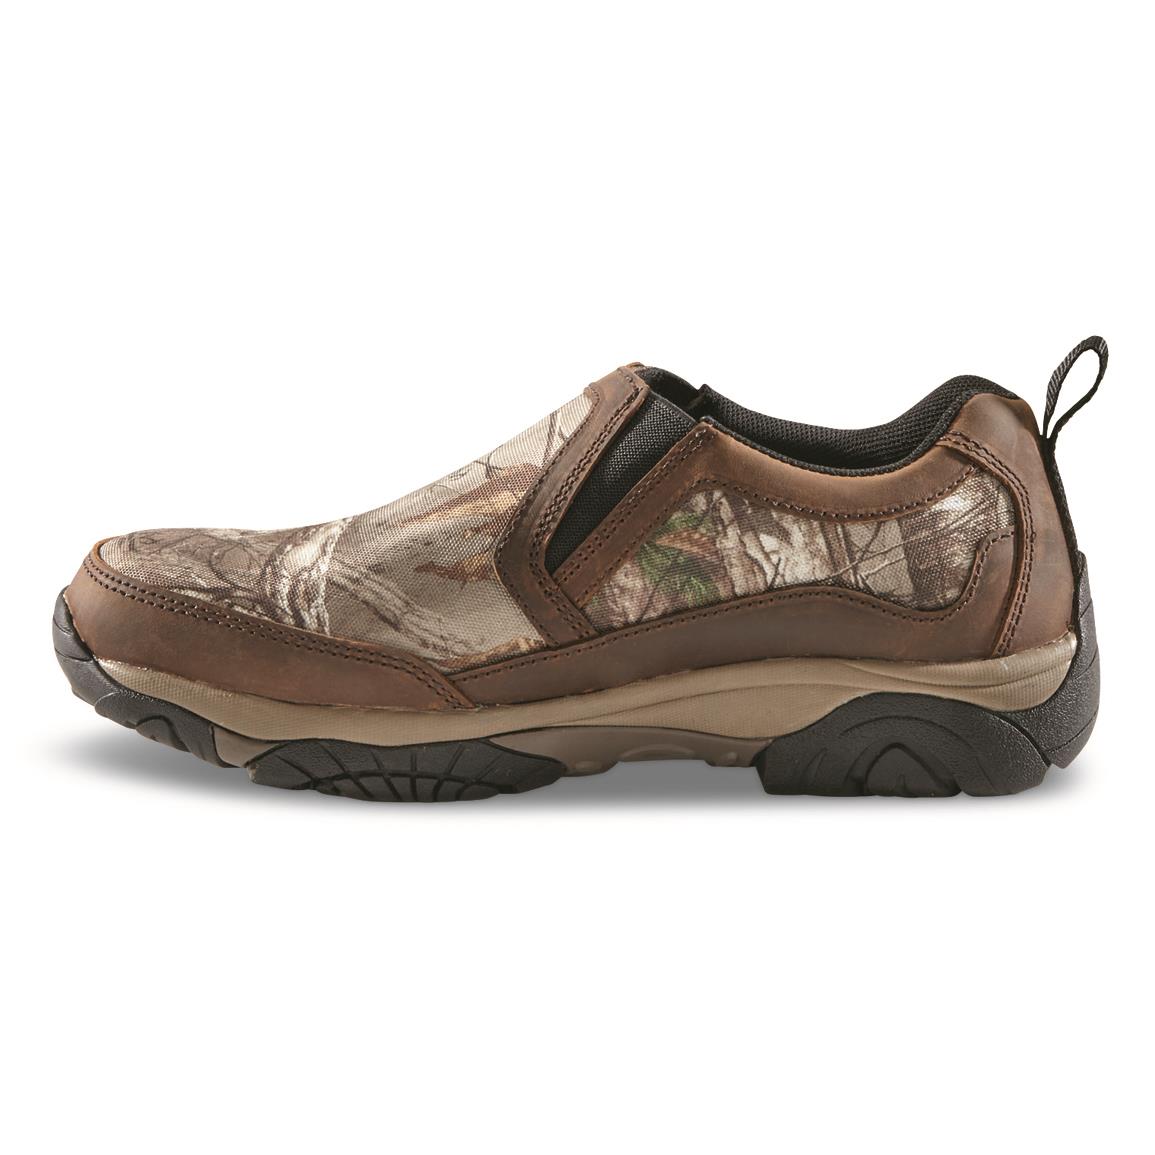 Reebok Men's Sublite Cushion Work Composite Toe Slip-on Shoes - 710338 ...